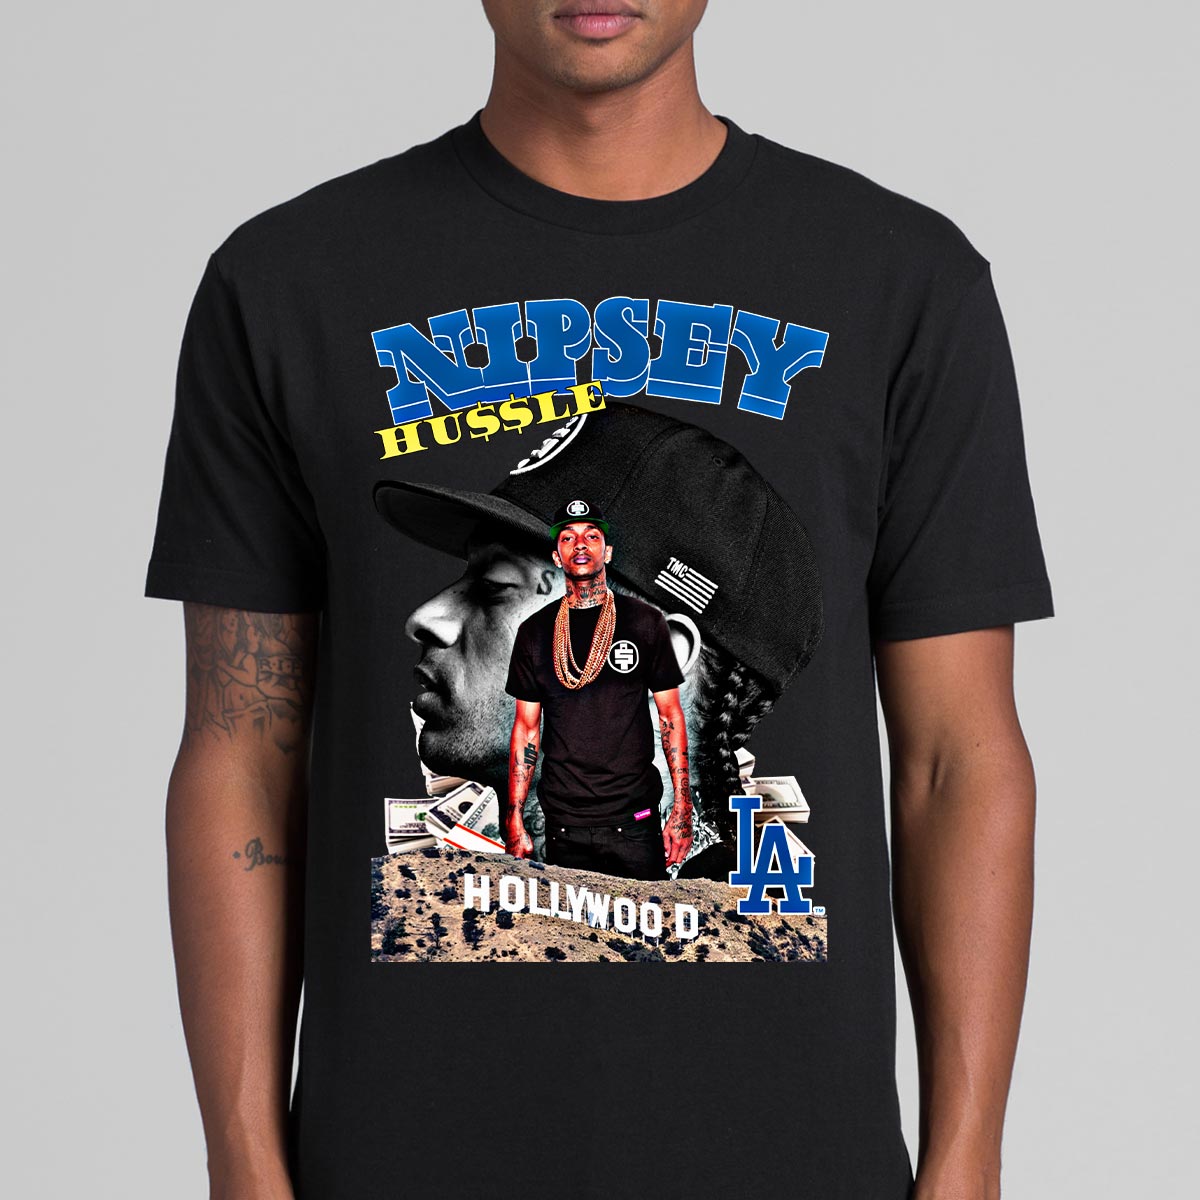 Nipsey Hussle 02 T-Shirt Rapper Family Fan Music Hip Hop Culture